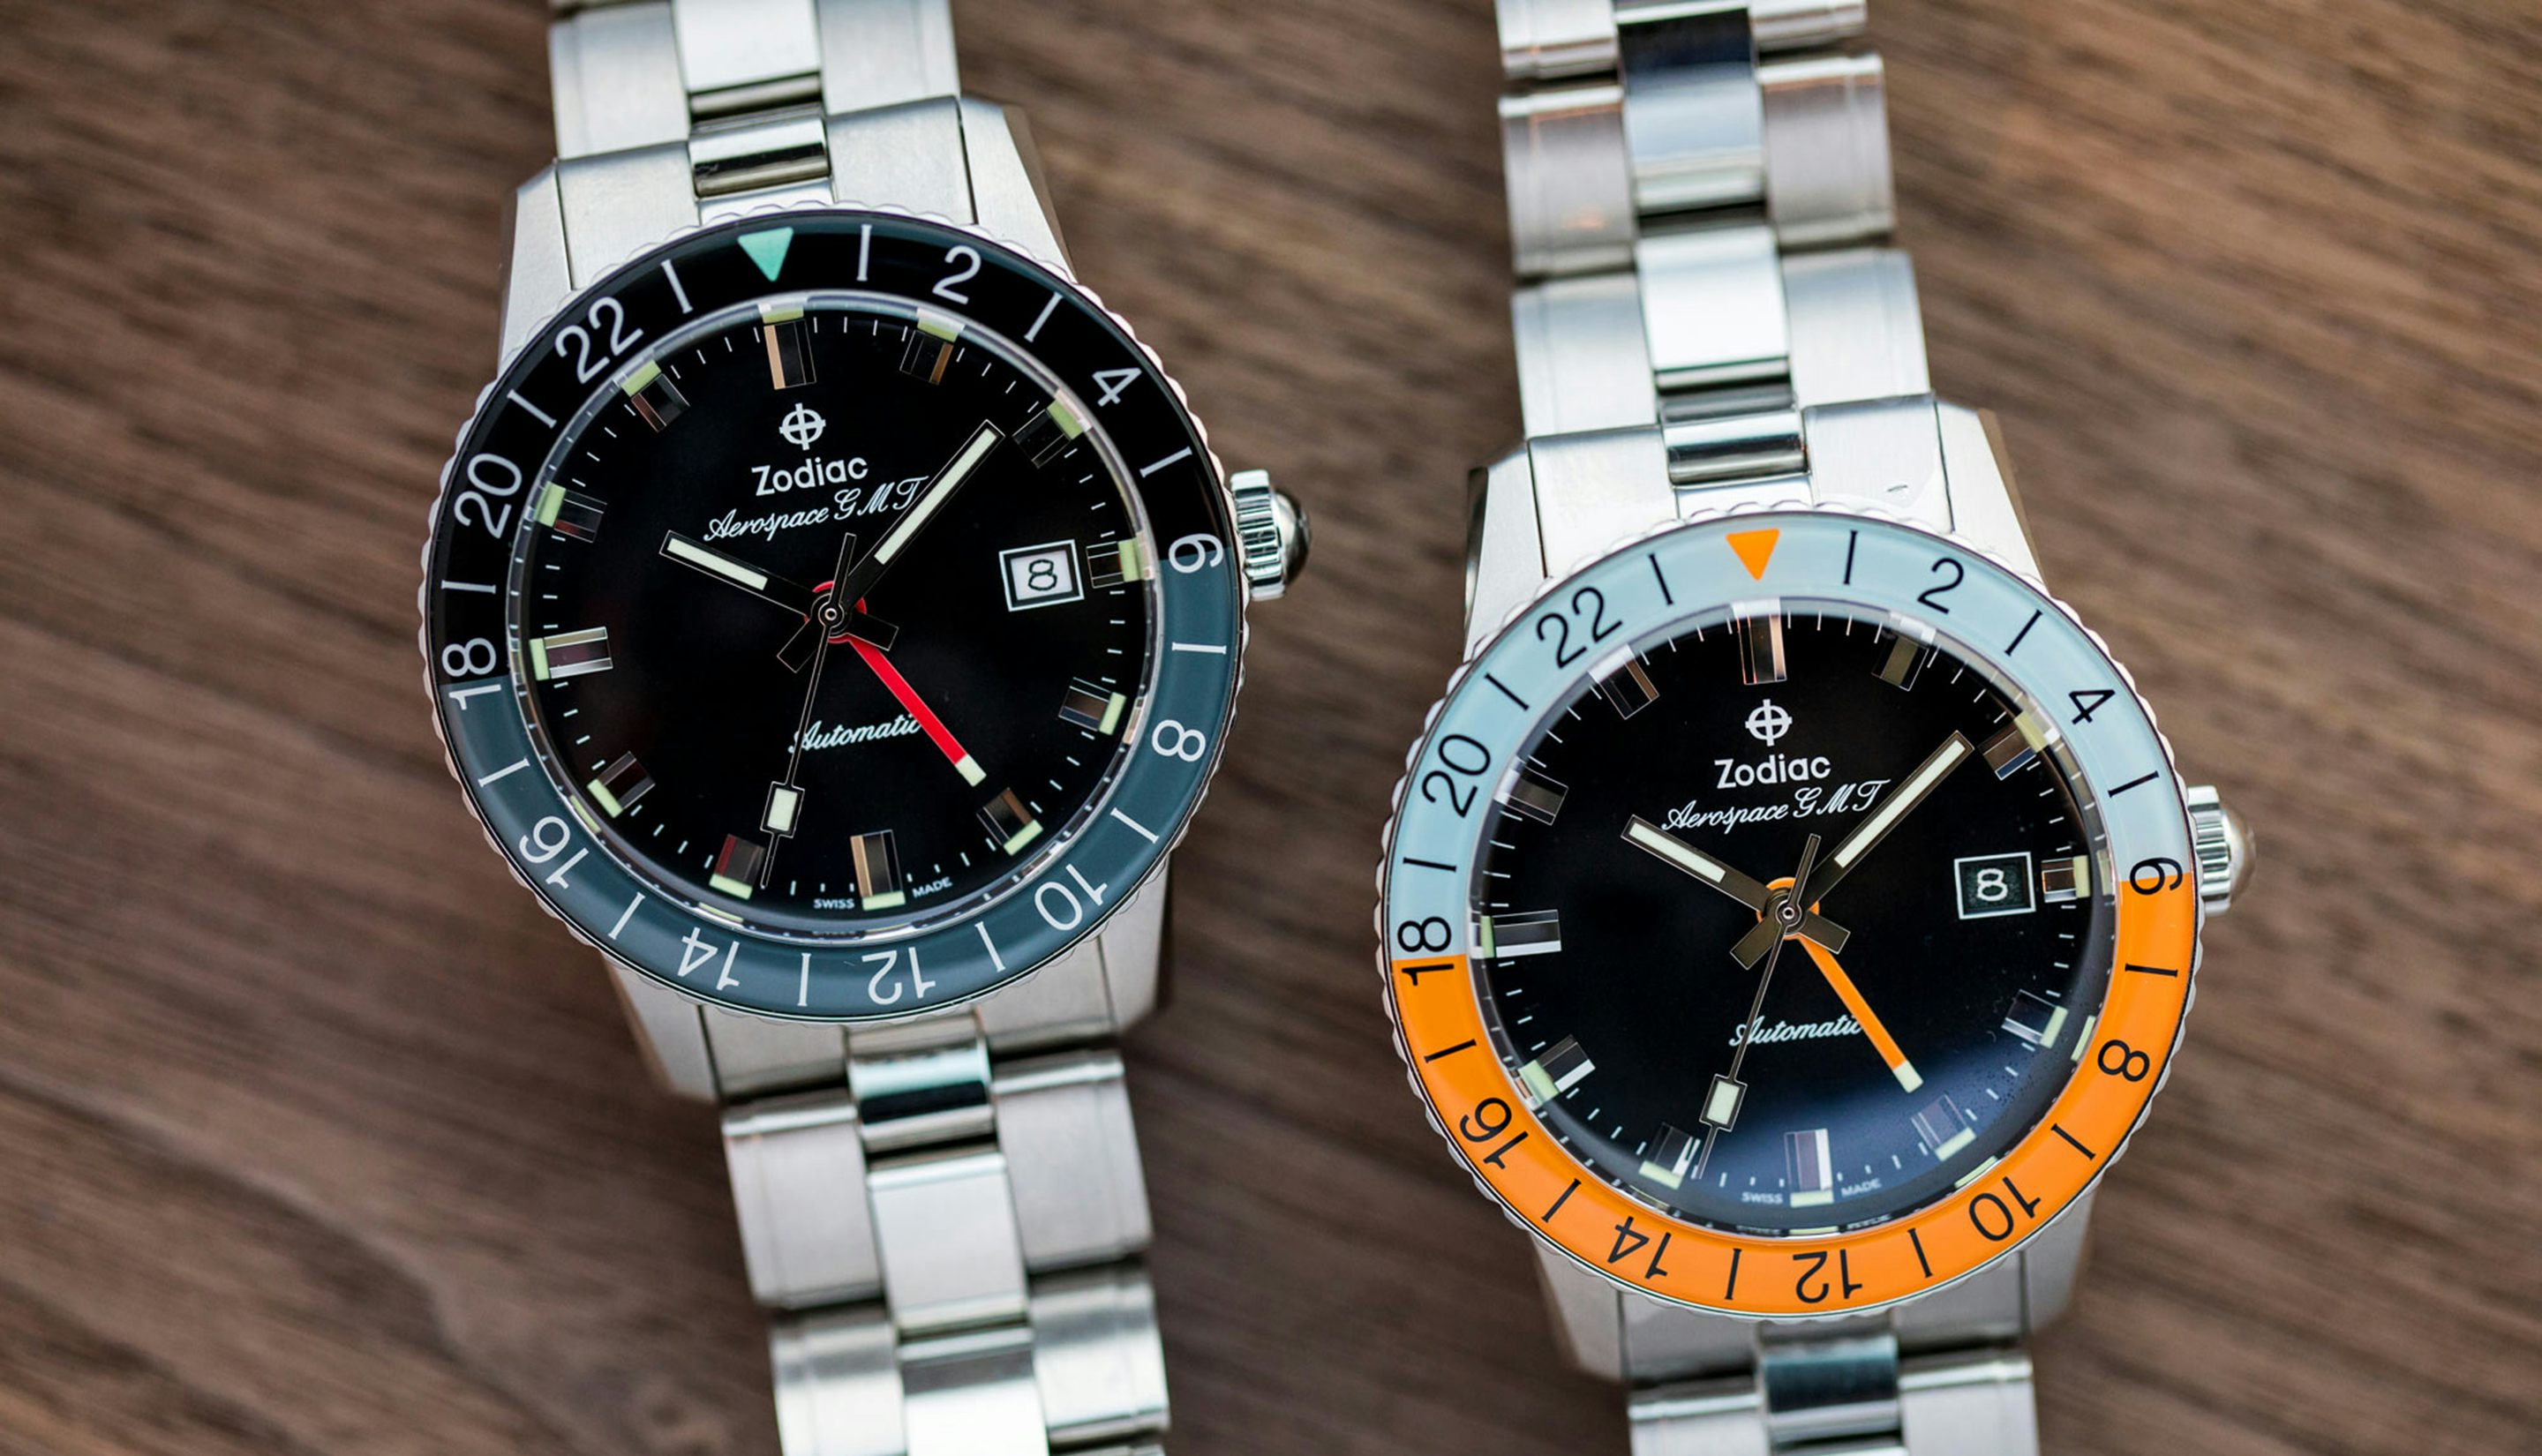 20 Highest Quality Watches Under $200